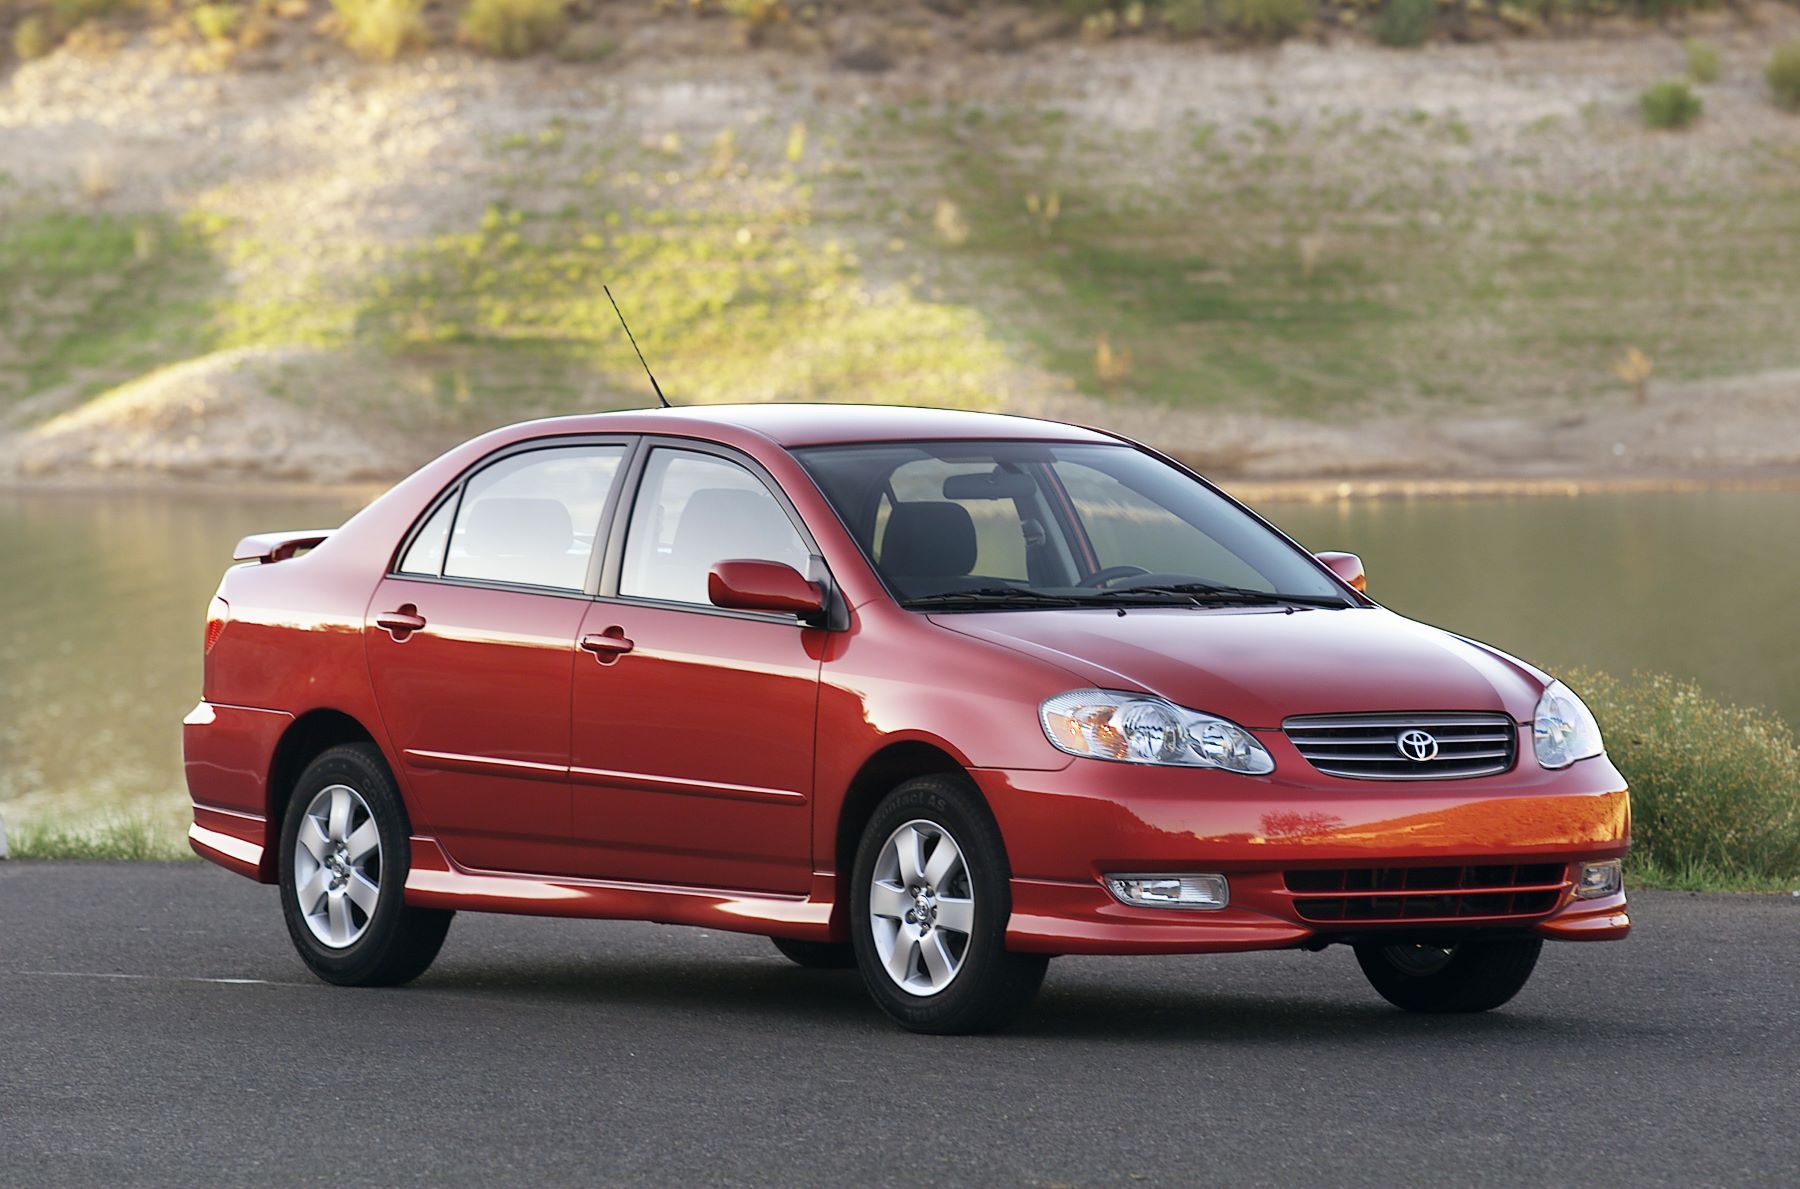 2003-2006 Toyota Corolla sedan model year design in red